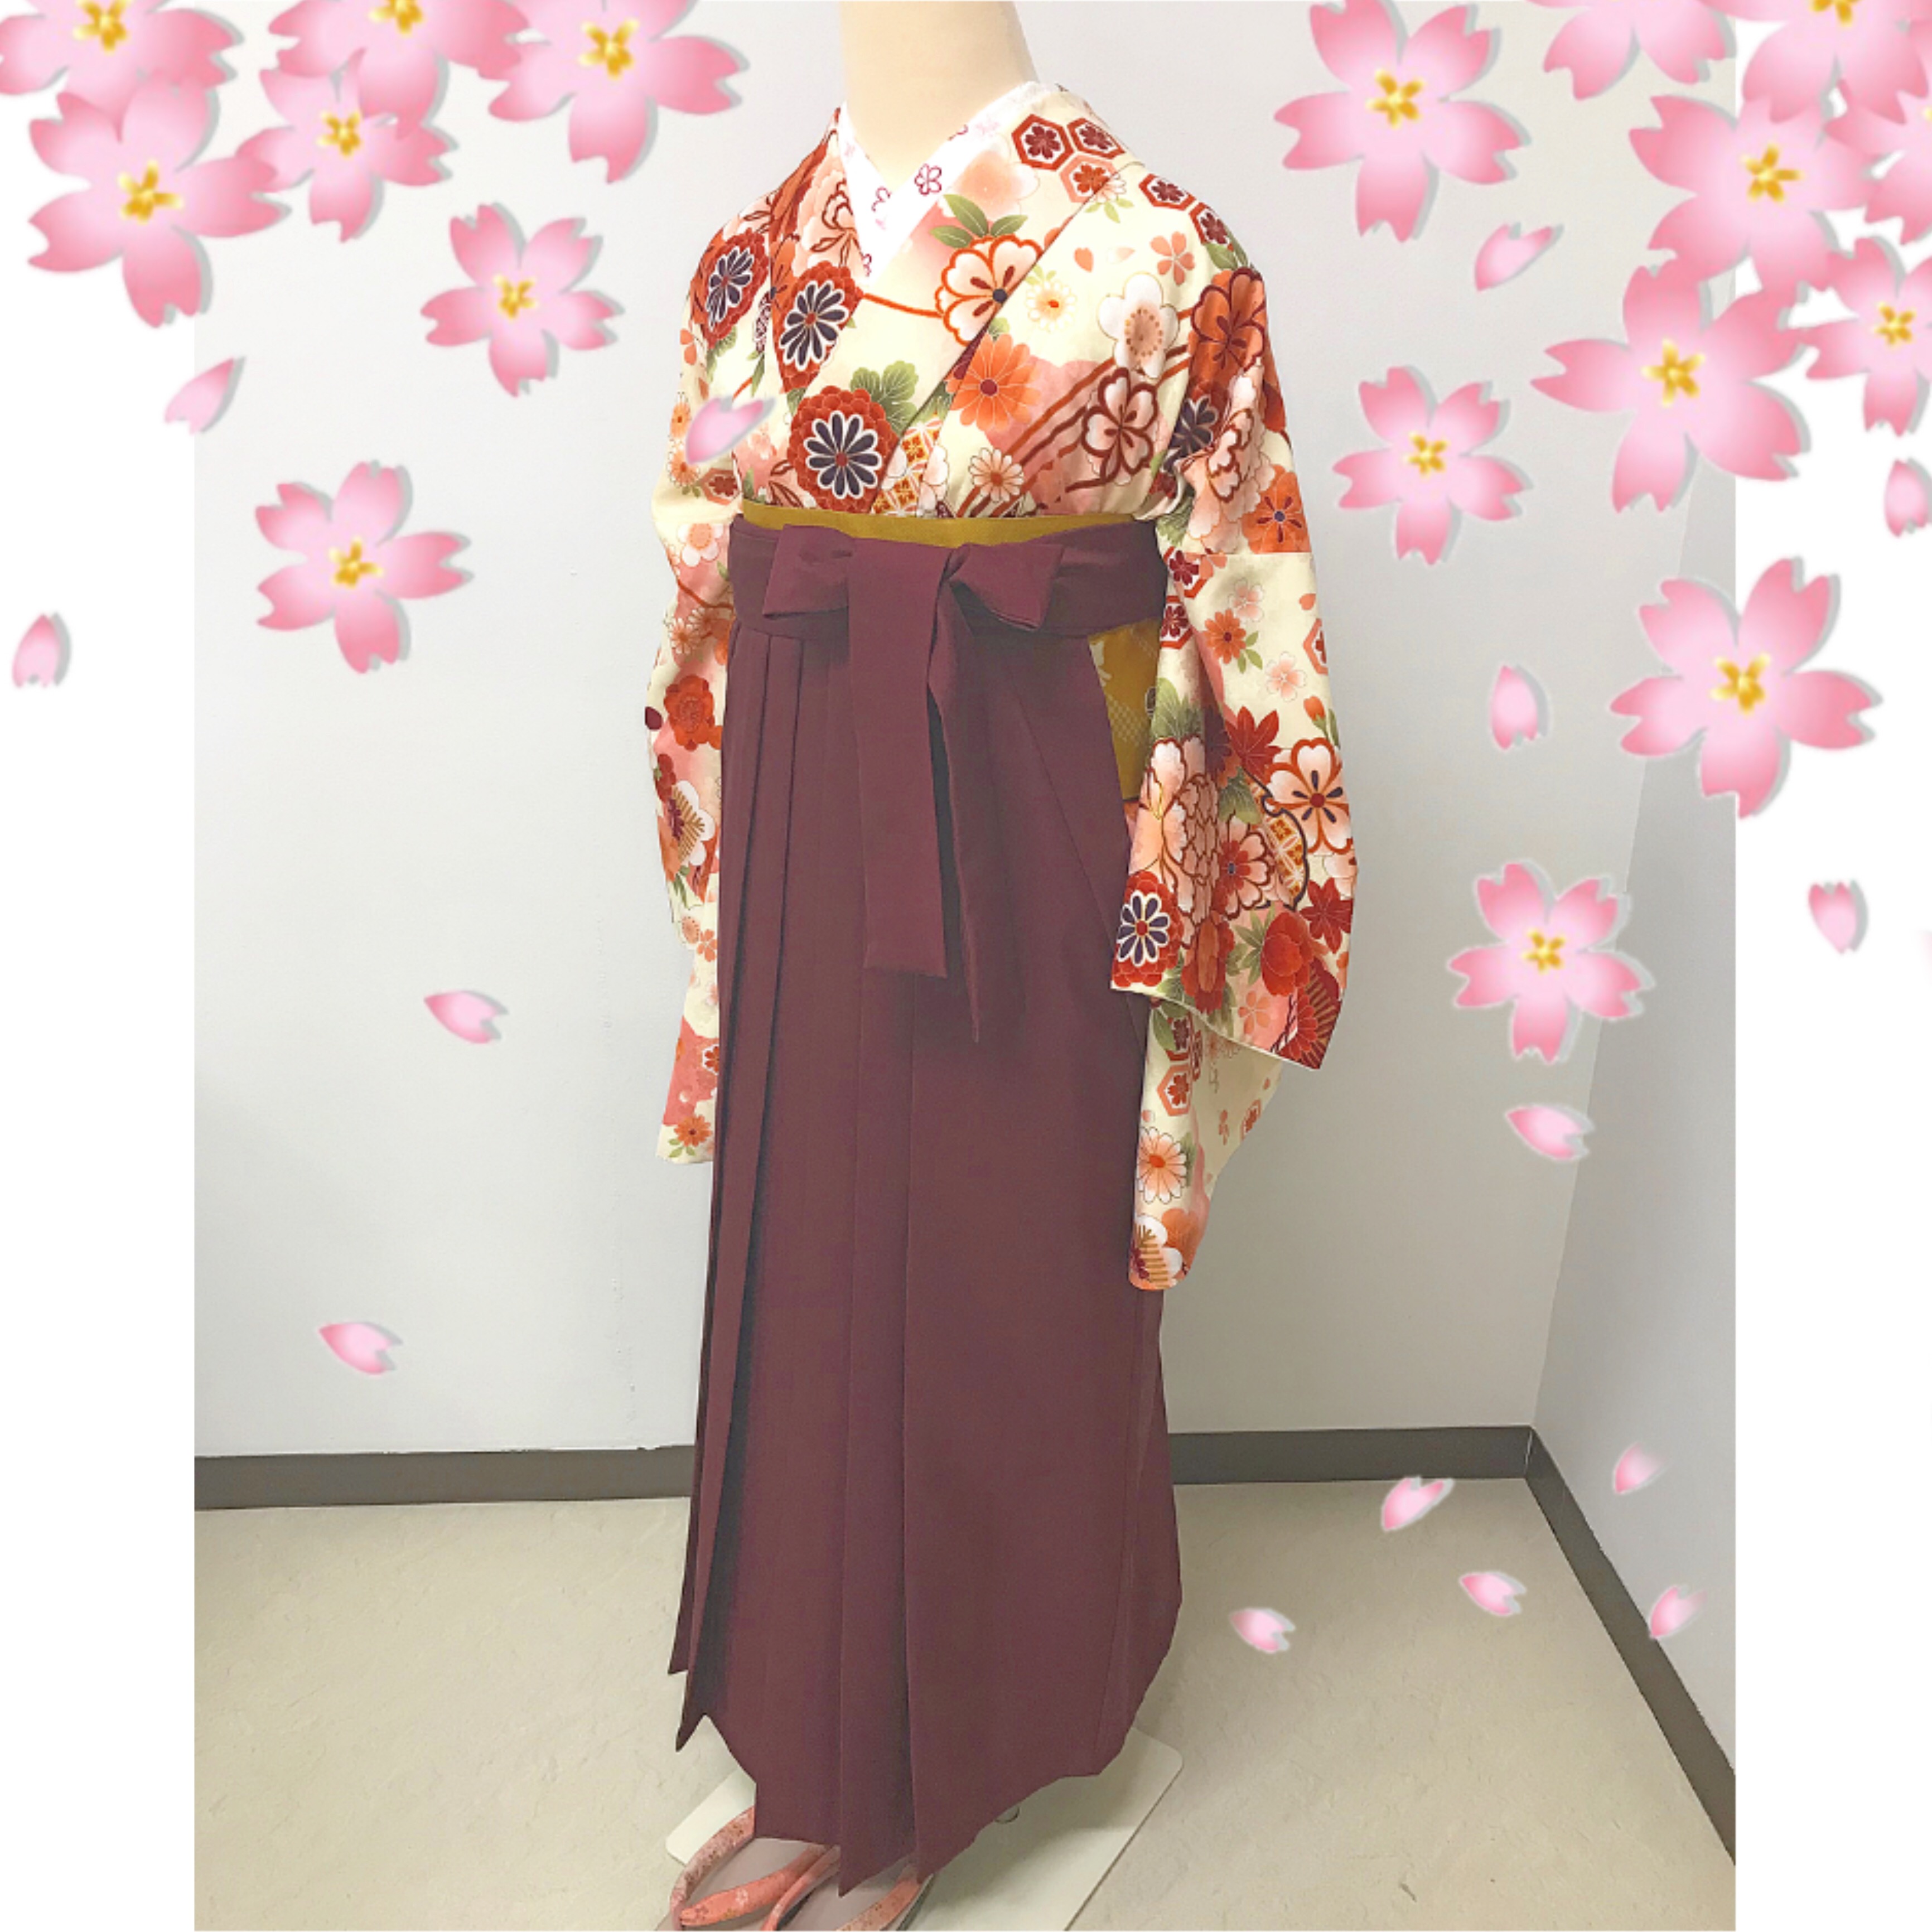 Shop Topics 3月といえば 福岡で着物 浴衣を楽しむなら 着物レンタルvasara